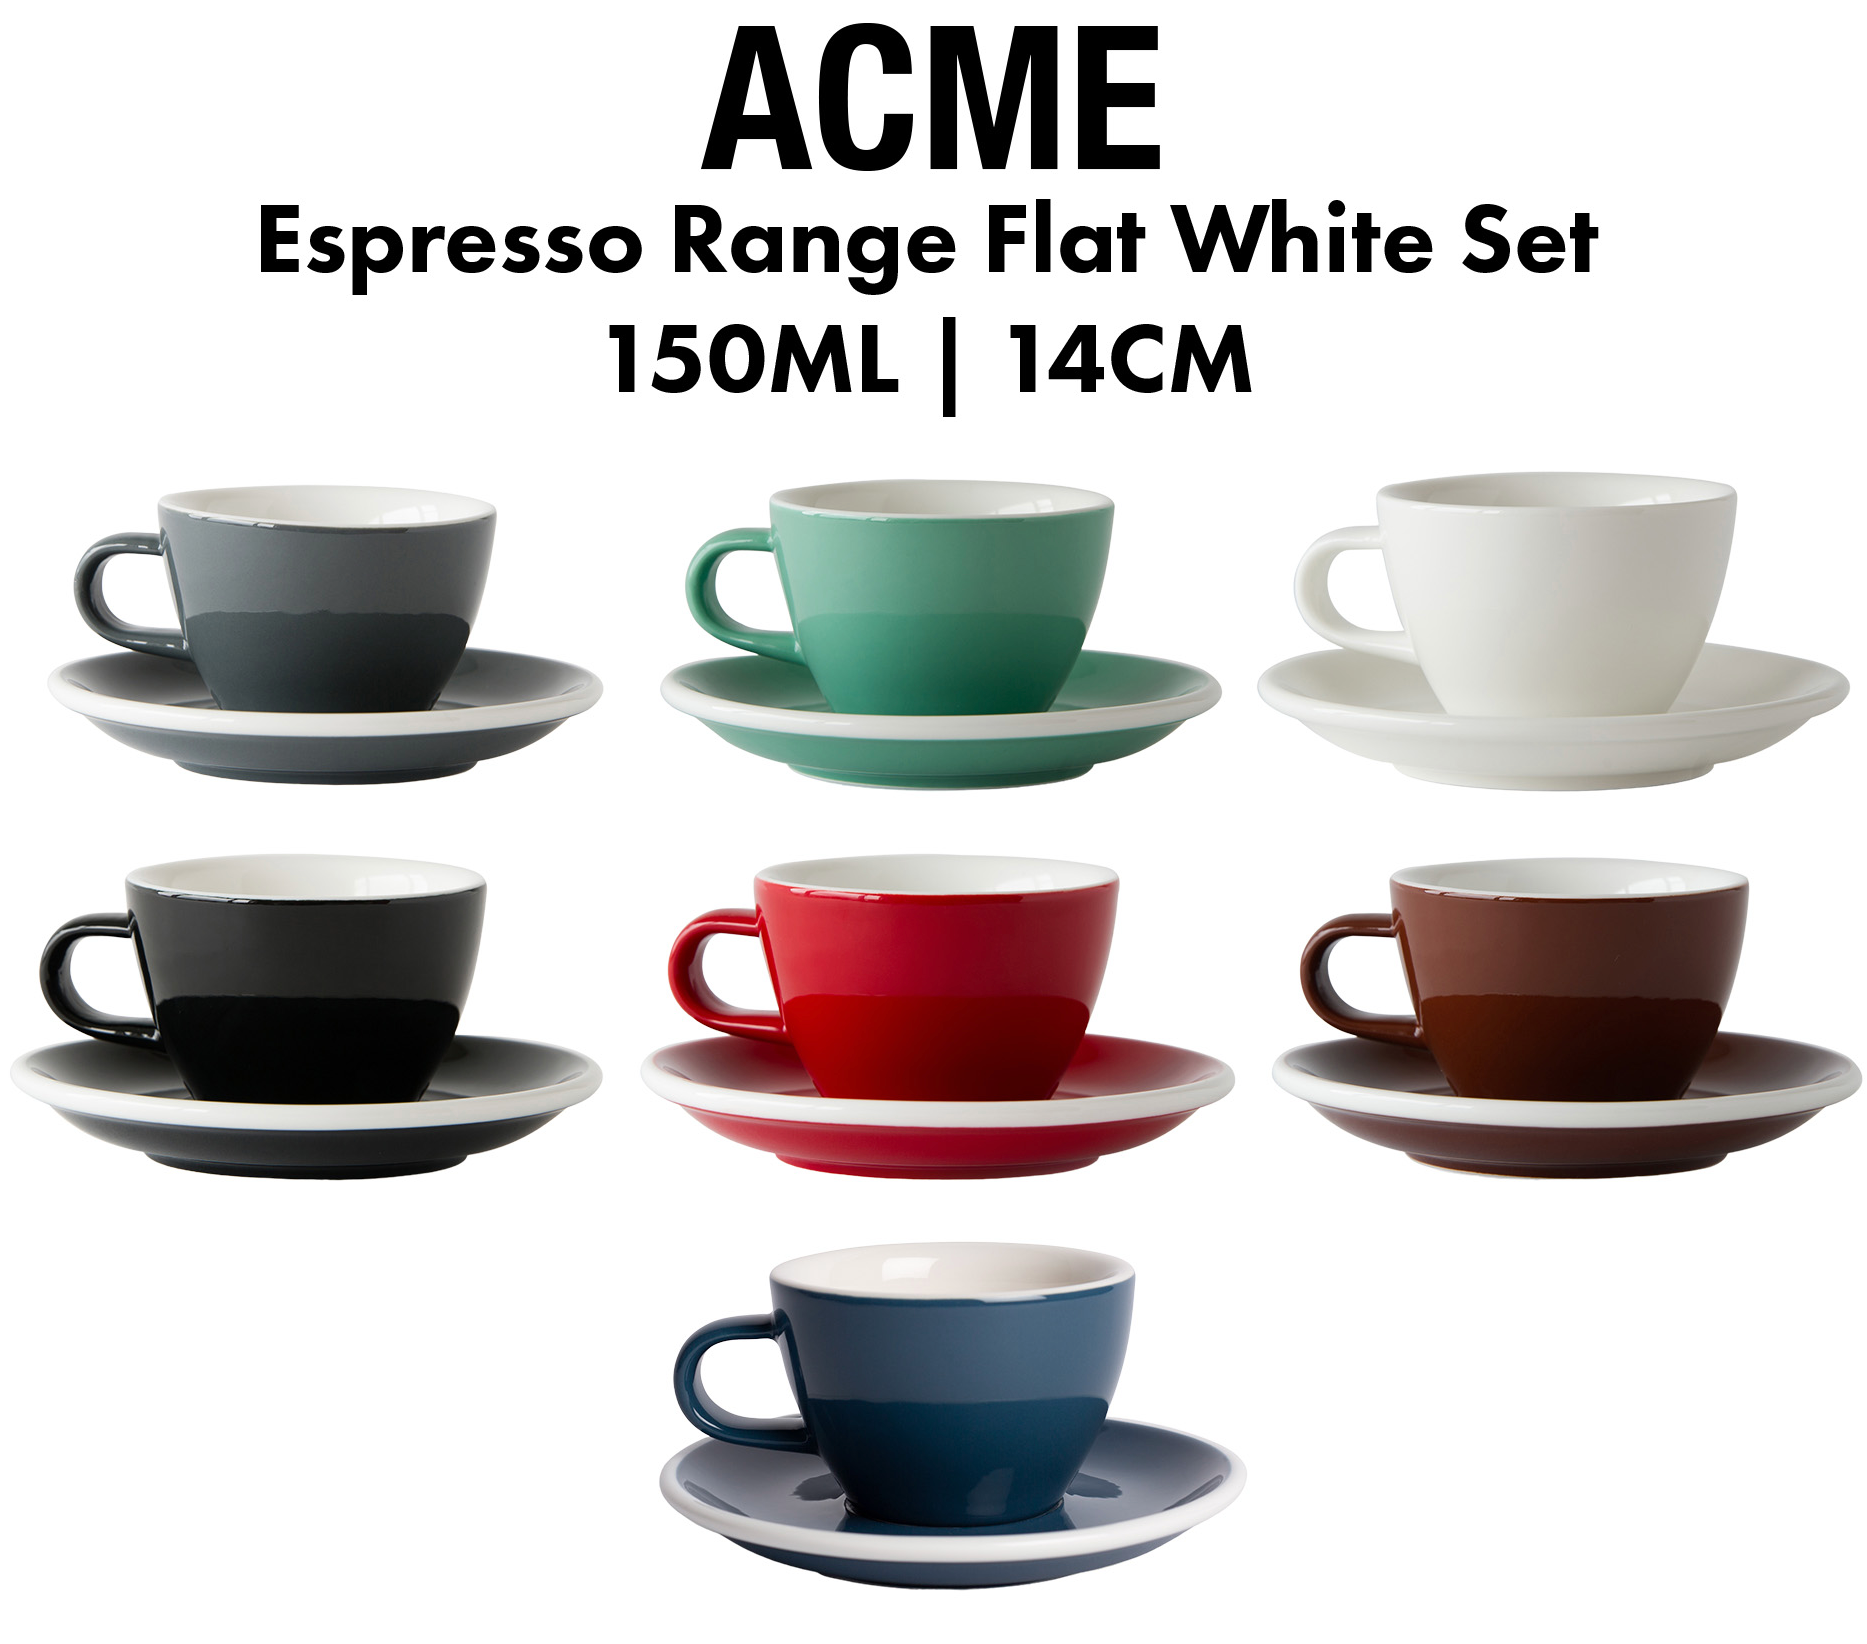 ACME Espresso Range Flat White Cup 150ml and Saucer 14cm Set